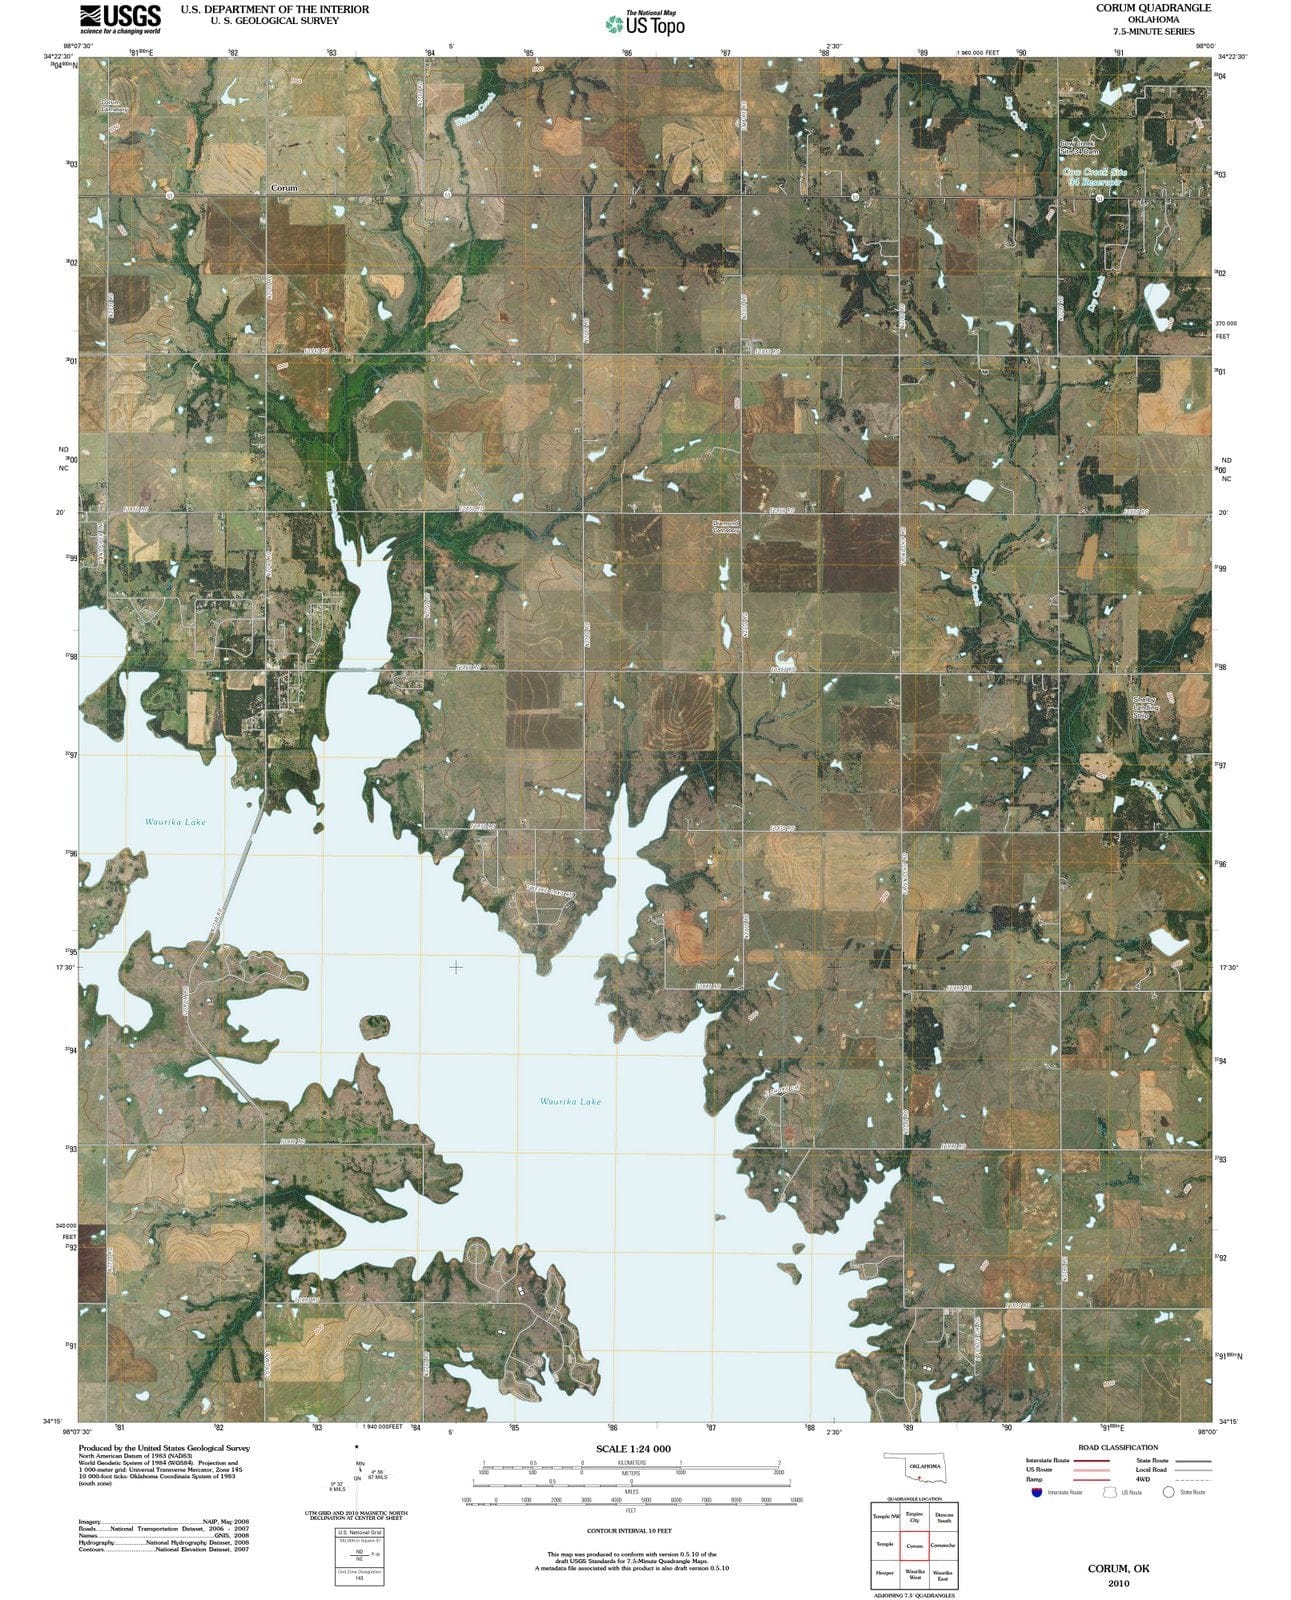 2010 Corum, OK - Oklahoma - USGS Topographic Map